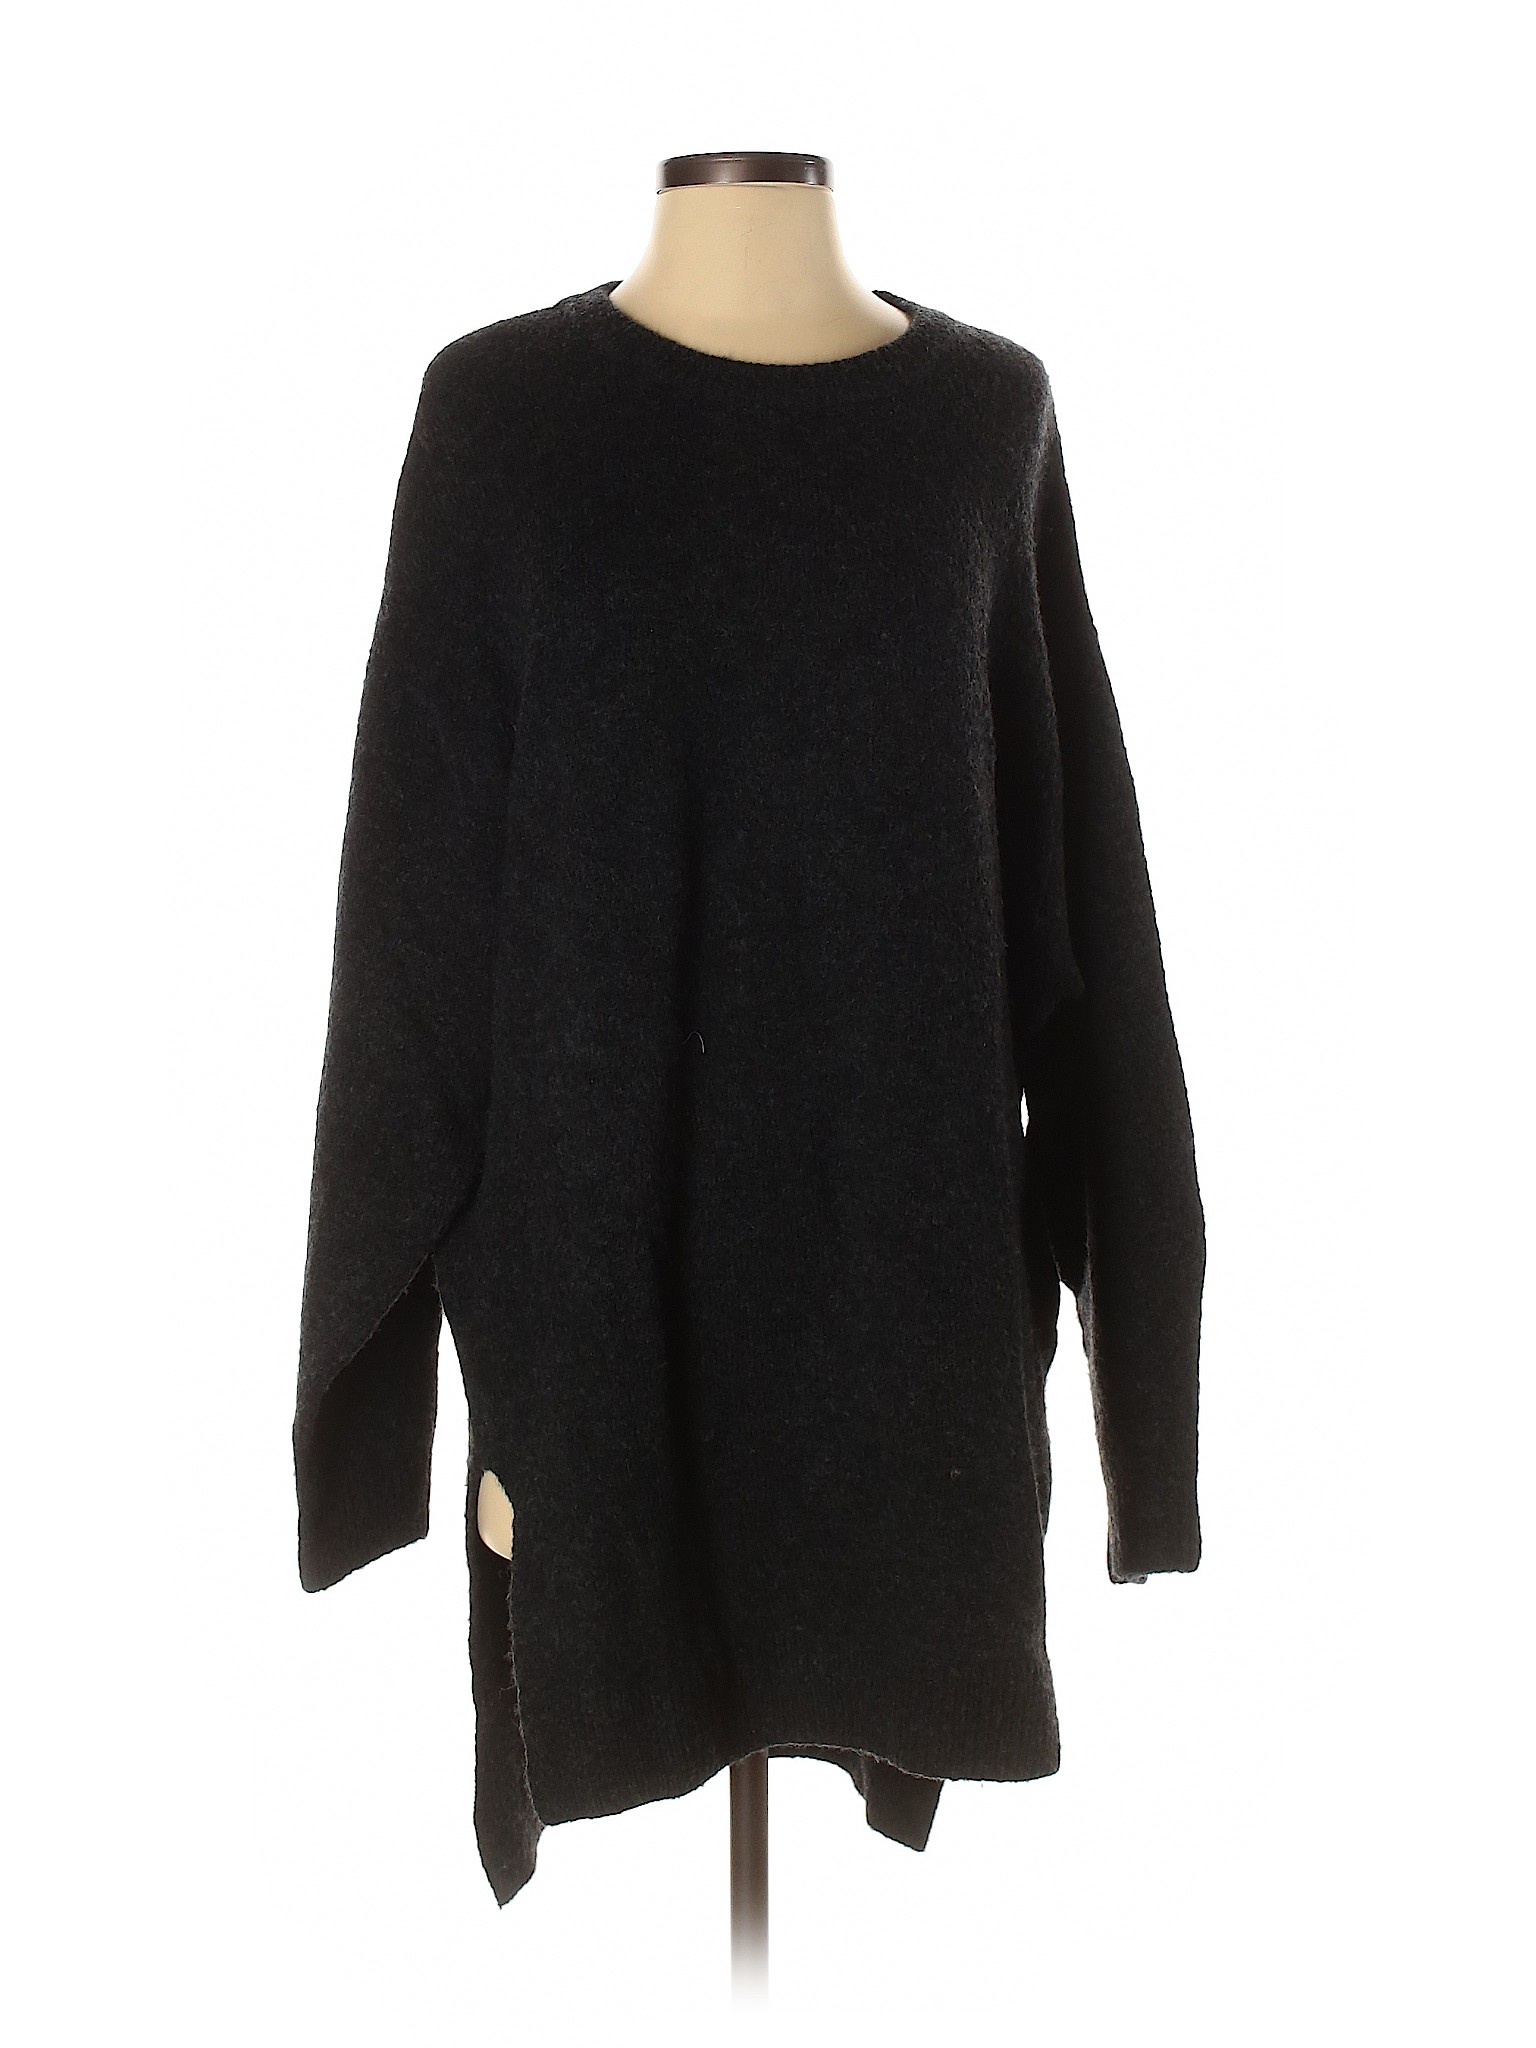 H&M Women Black Pullover Sweater S | eBay